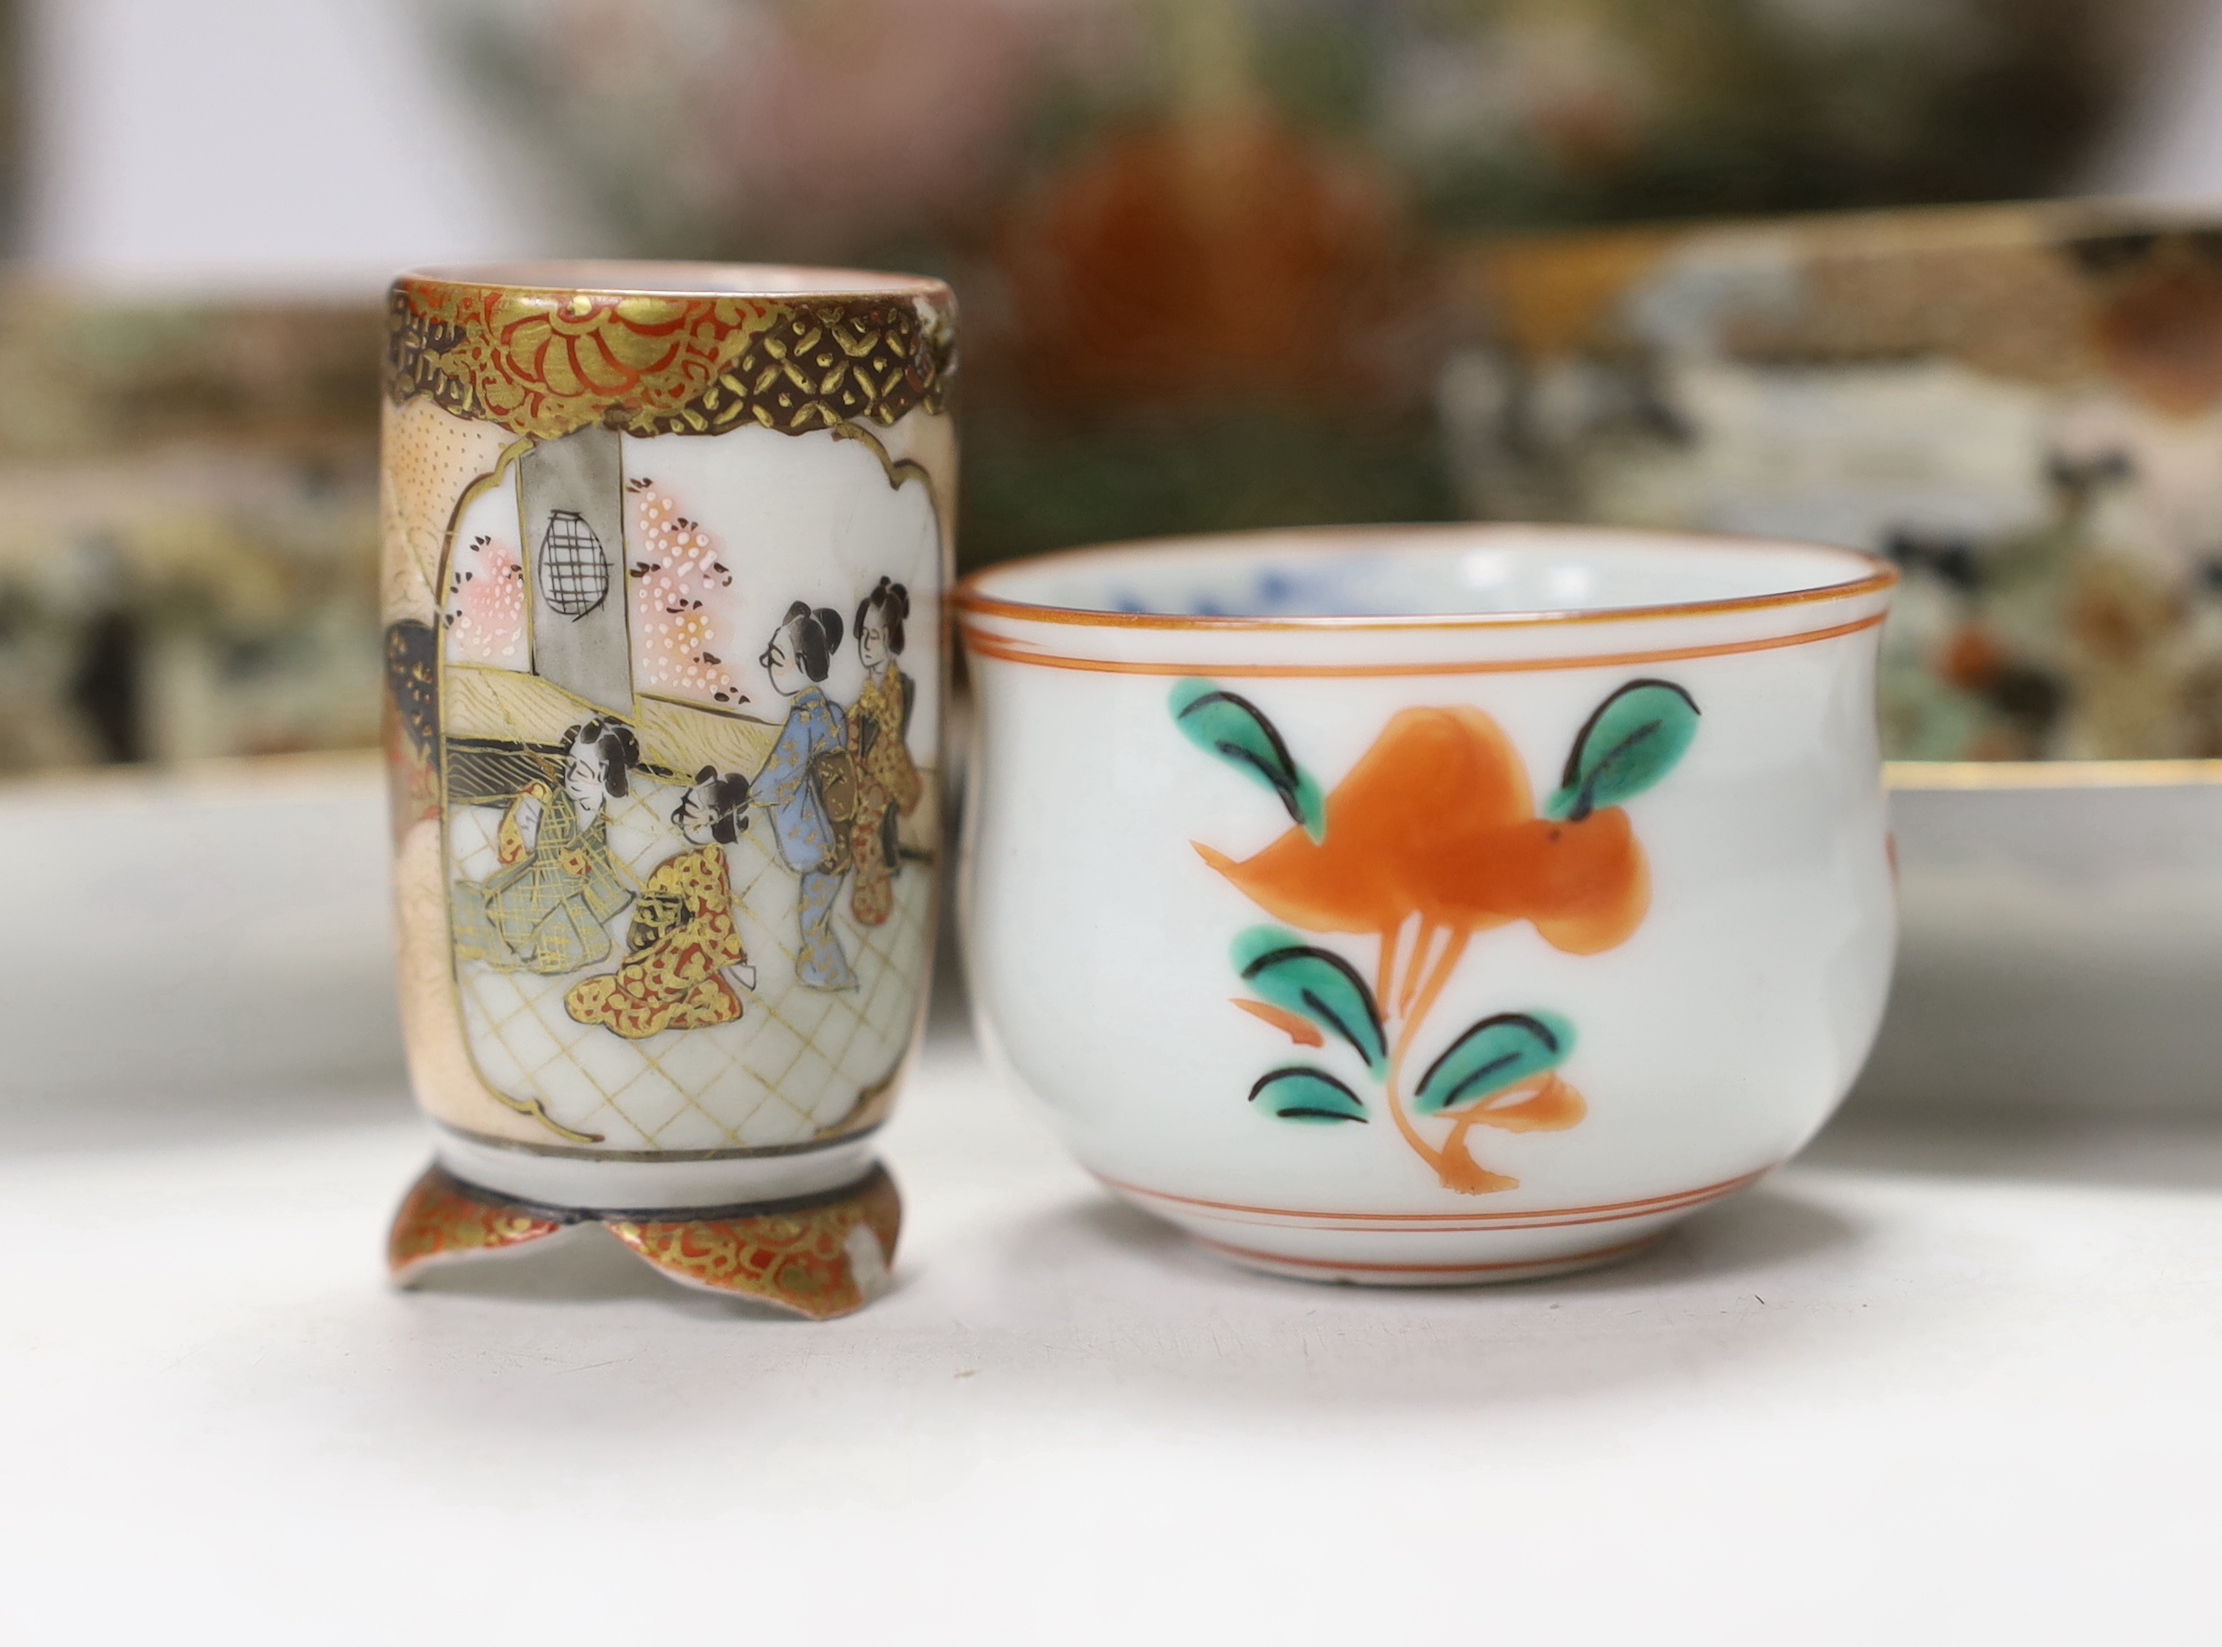 Japanese ceramics including an Imari bottle vase, a Satsuma vase and Kutani eggshell porcelain, tallest 22cm (8)